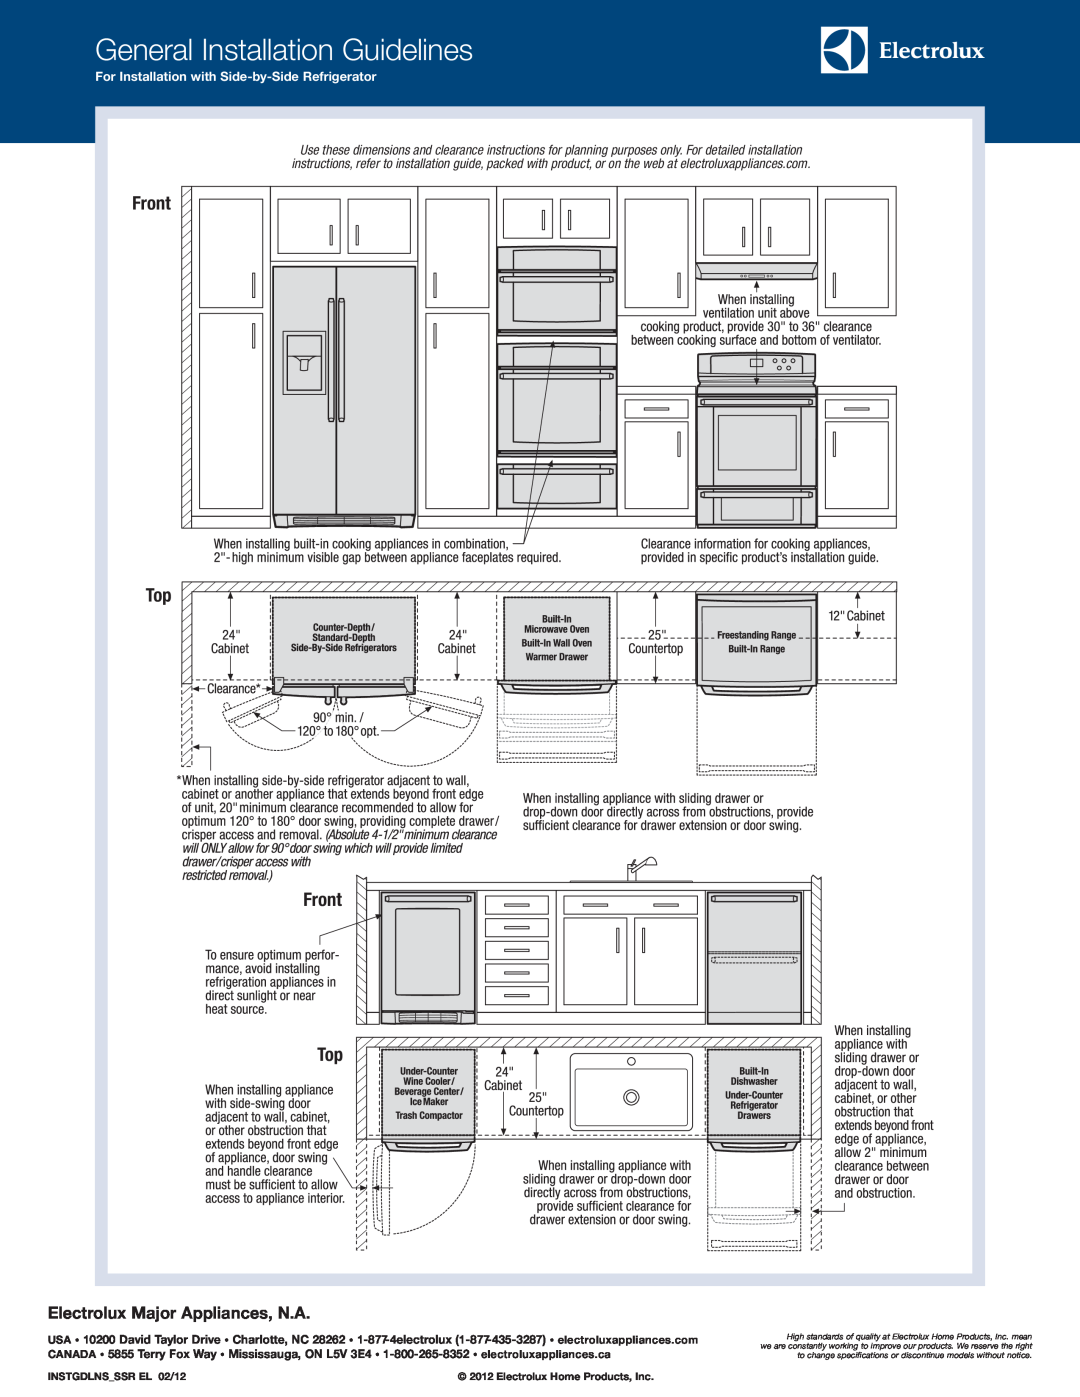 Electrolux EW30SO60L S General Installation Guidelines, Front Top, Electrolux Major Appliances, N.A, INSTGDLNSSSR EL 02/12 